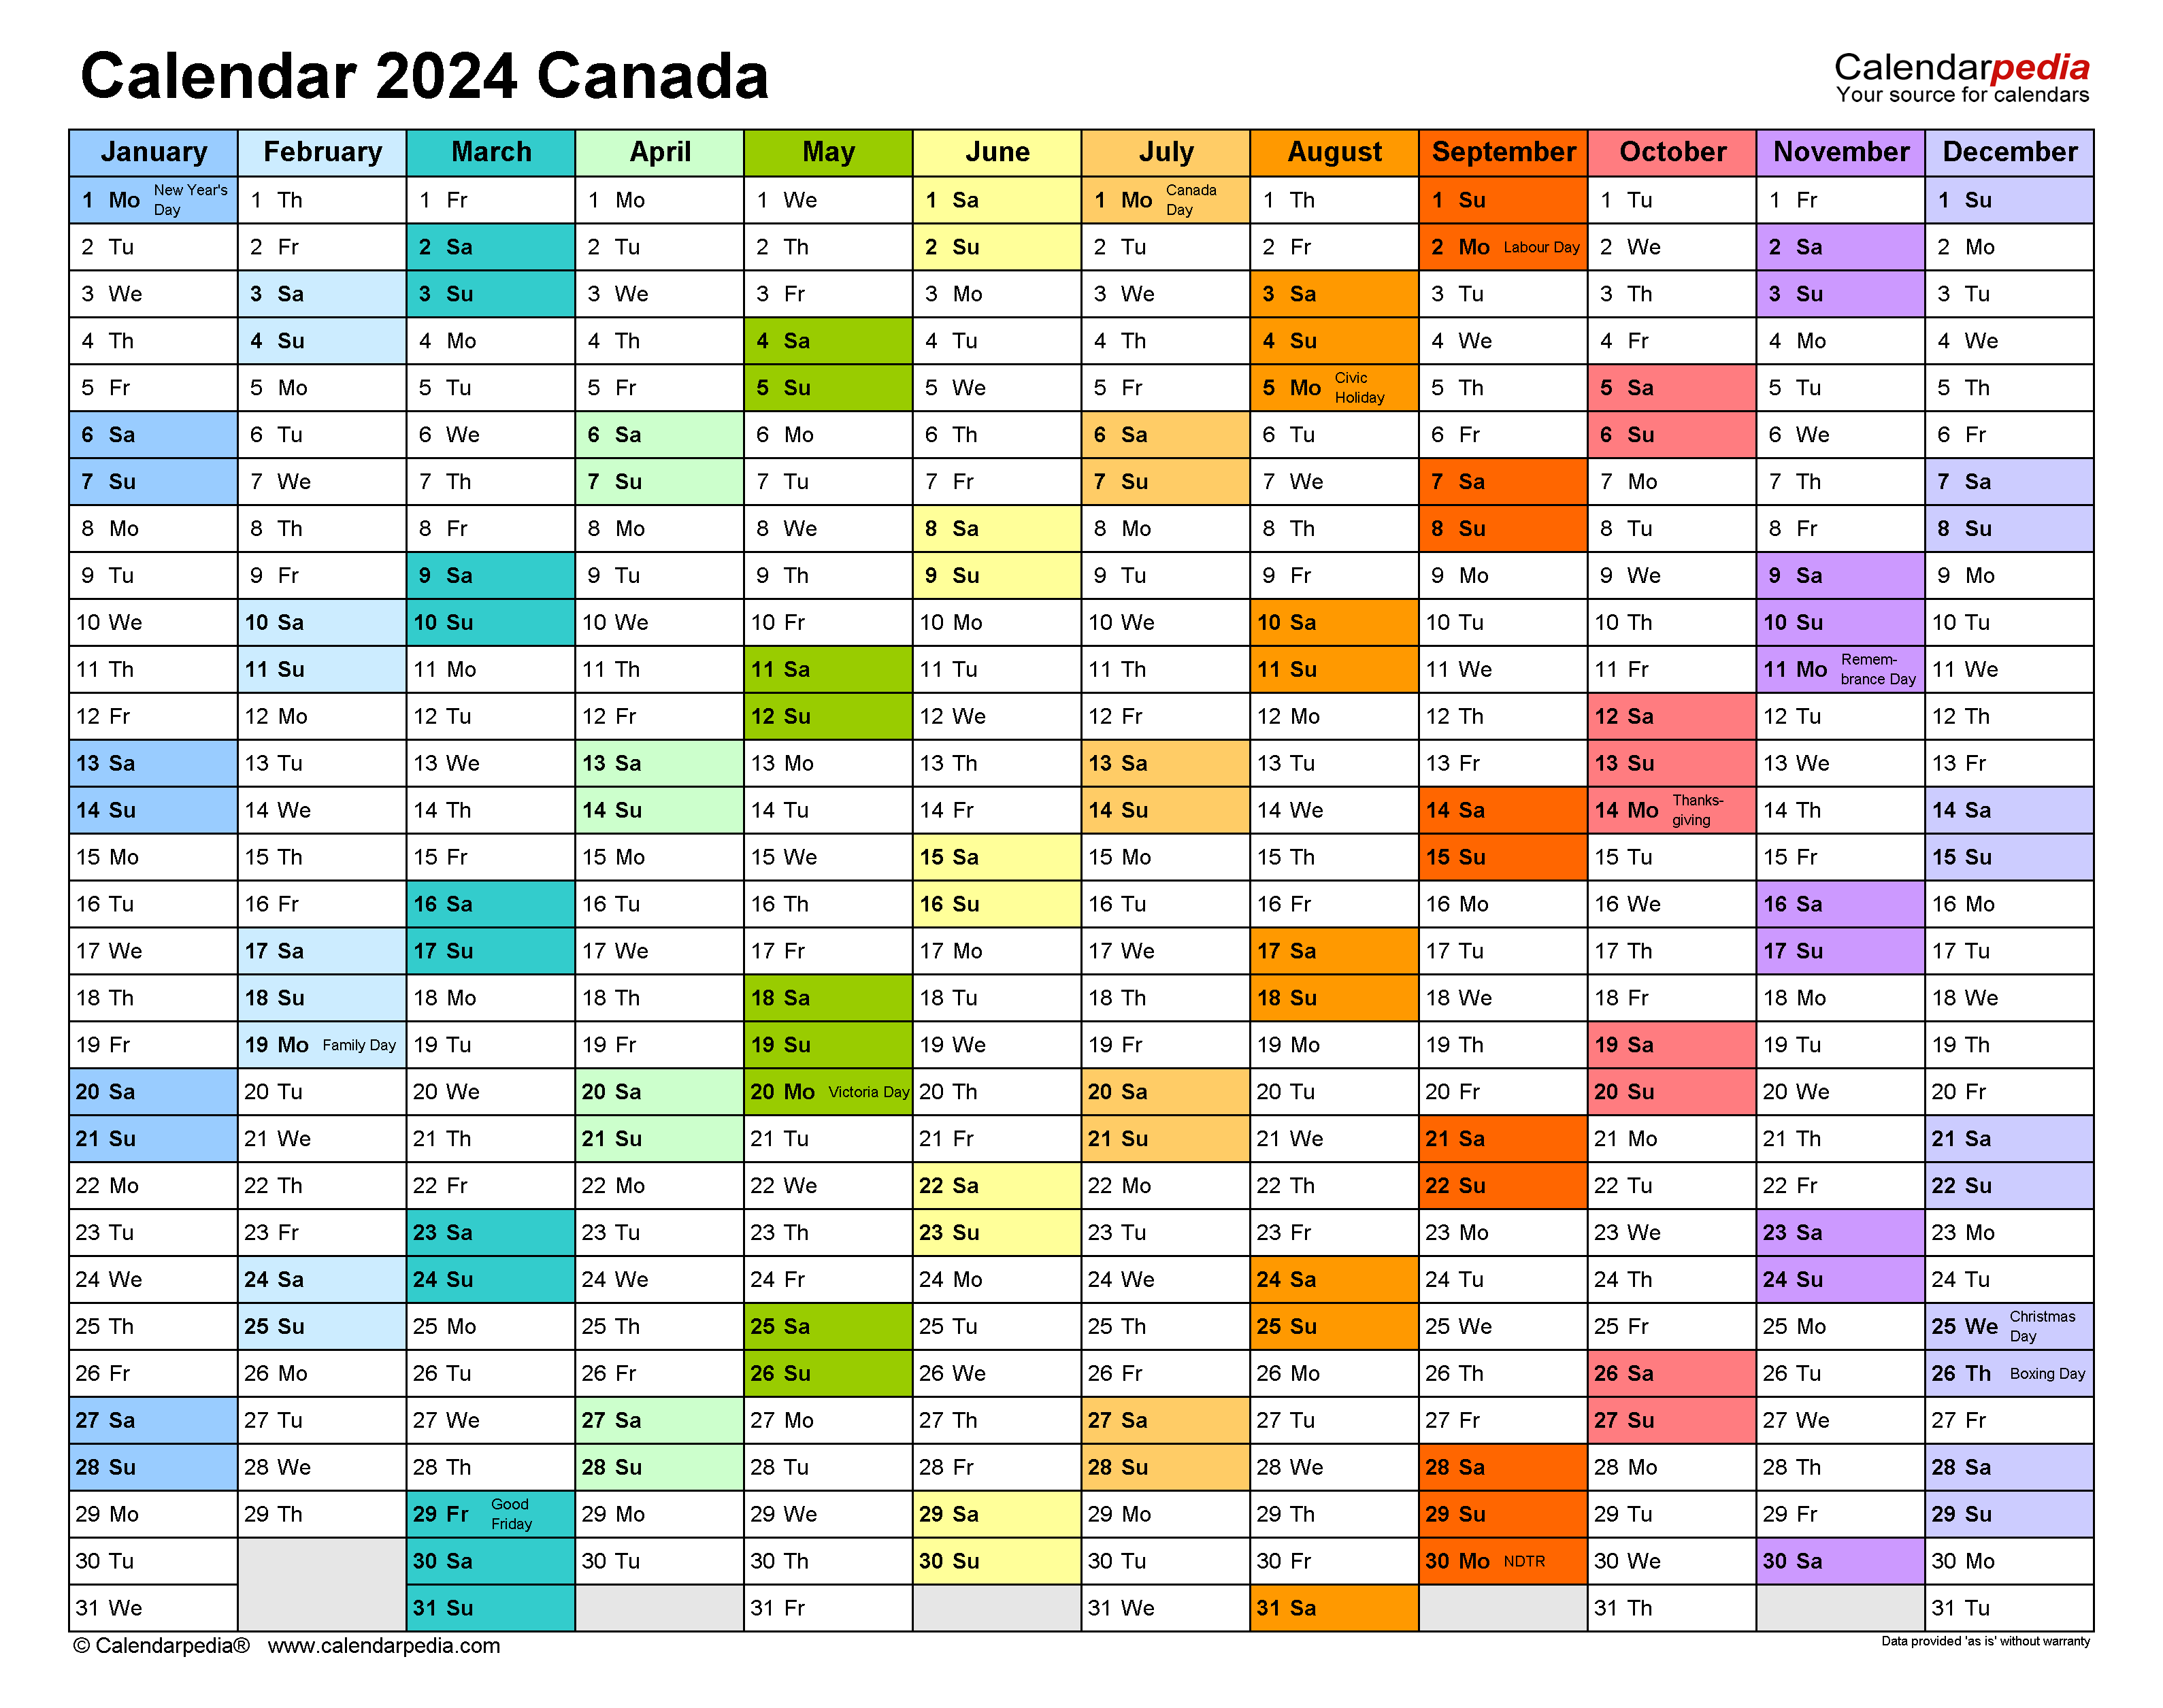 Canada Calendar 2024 - Free Printable Pdf Templates regarding Free Printable Calendar 2024 With Canadian Holidays